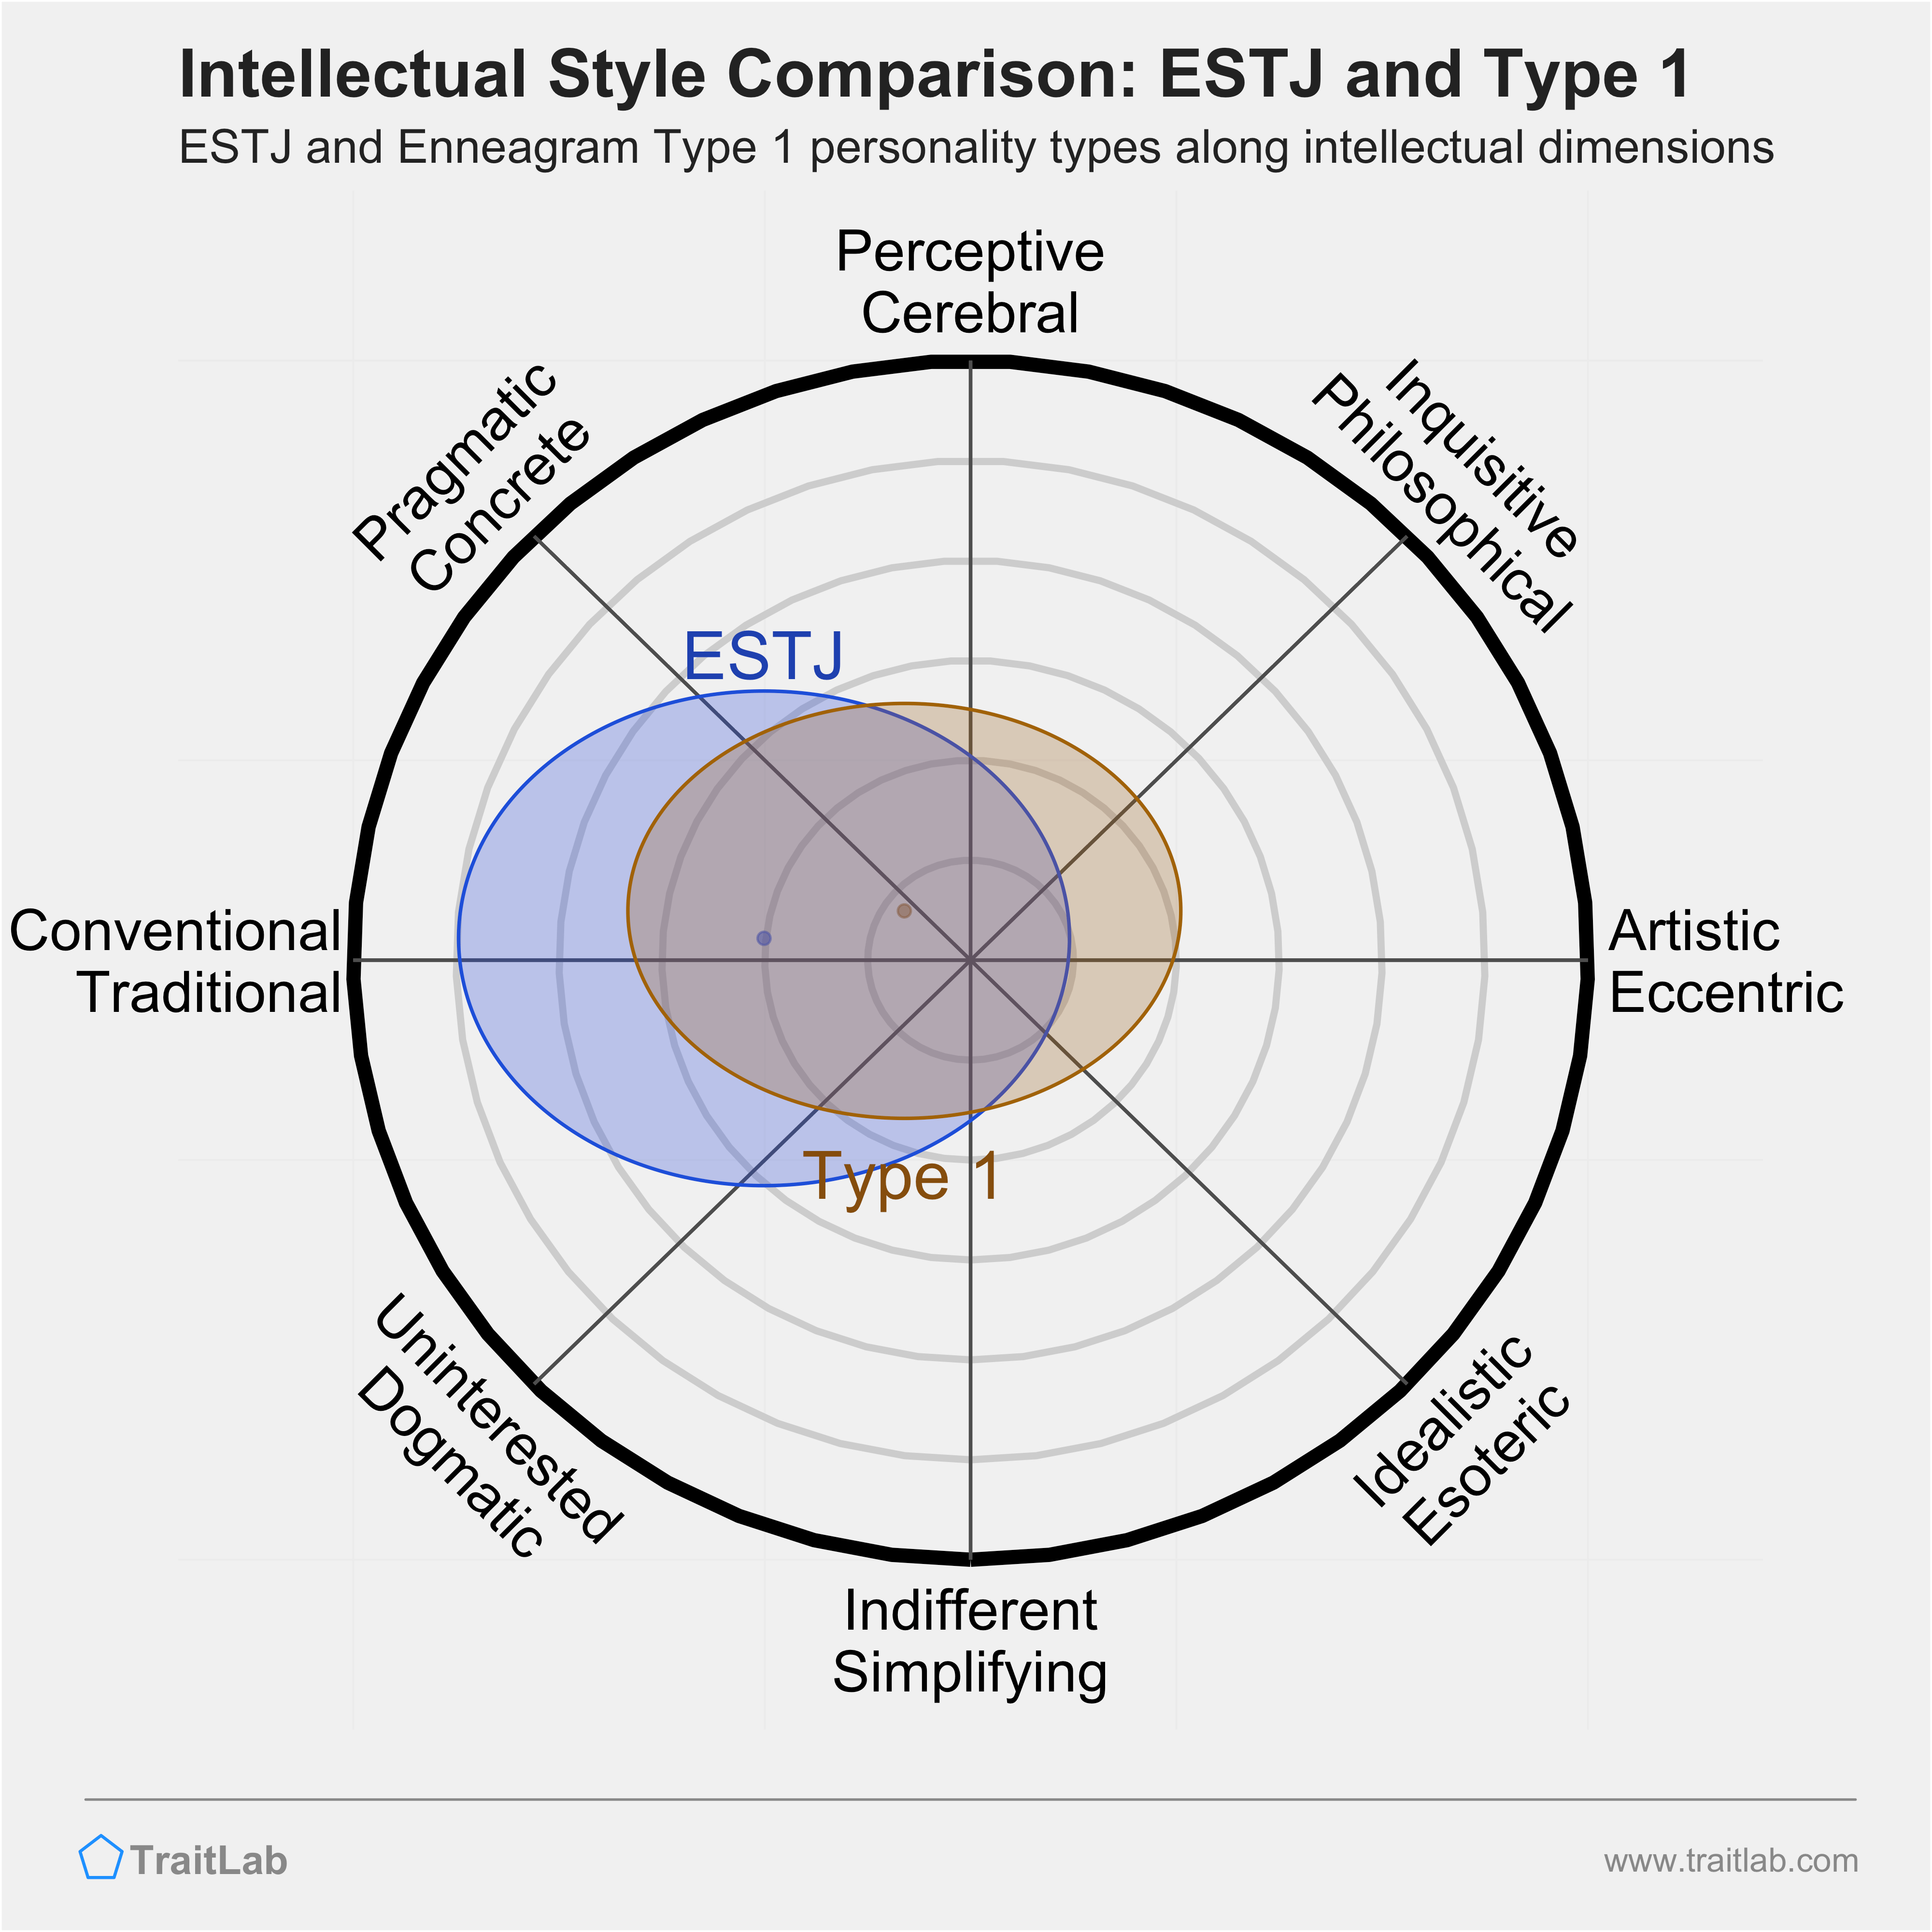 ESTJ and Type 1 comparison across intellectual dimensions